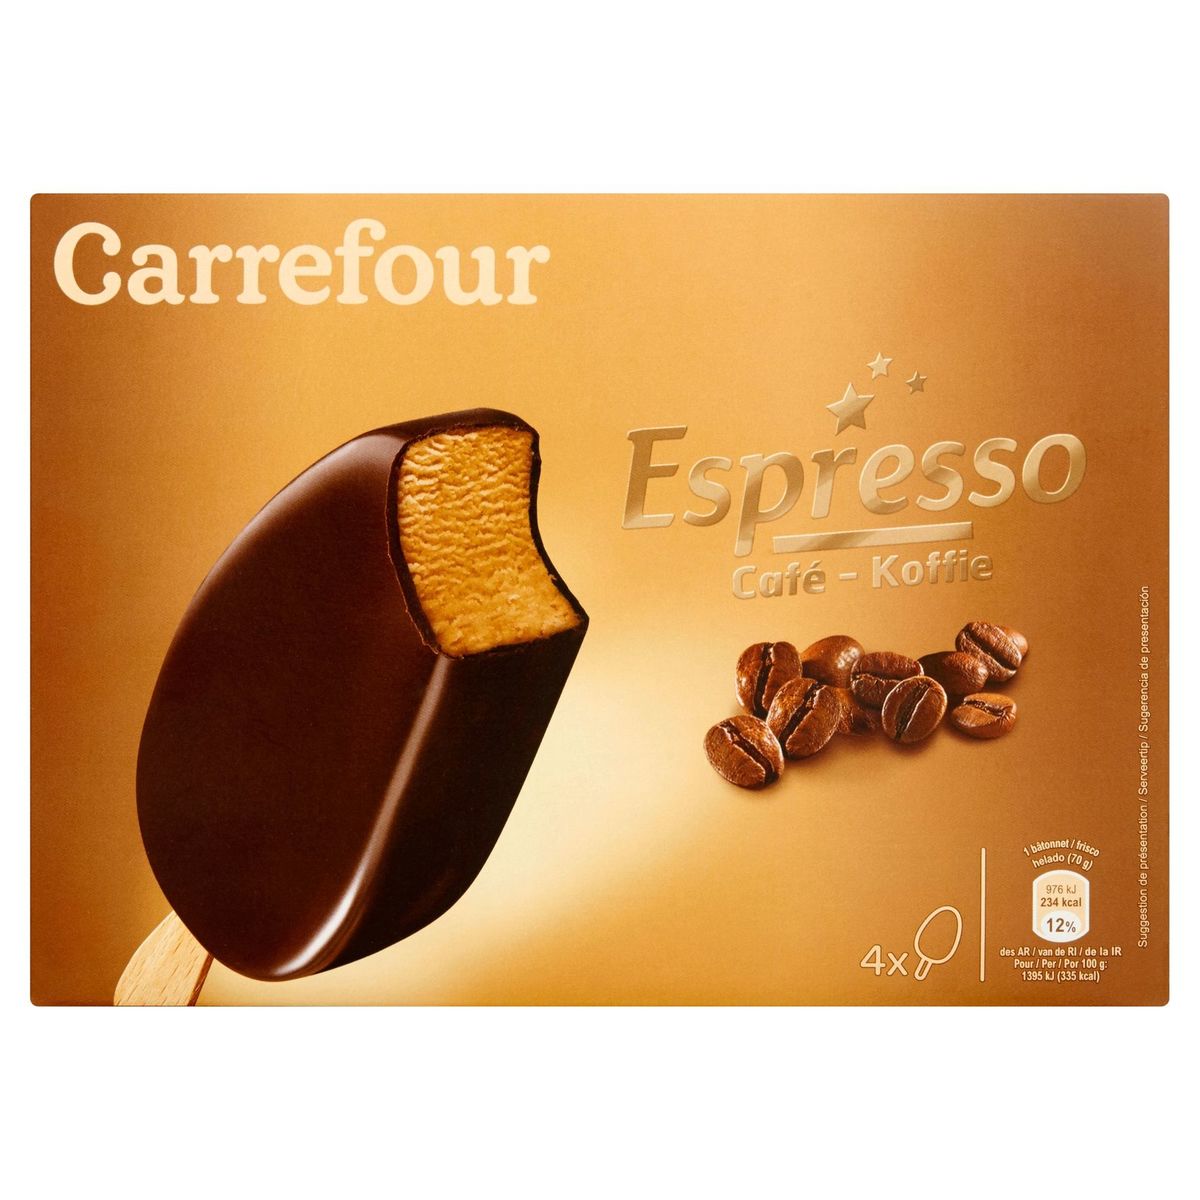 Carrefour Espresso Koffie 4 x 70 g